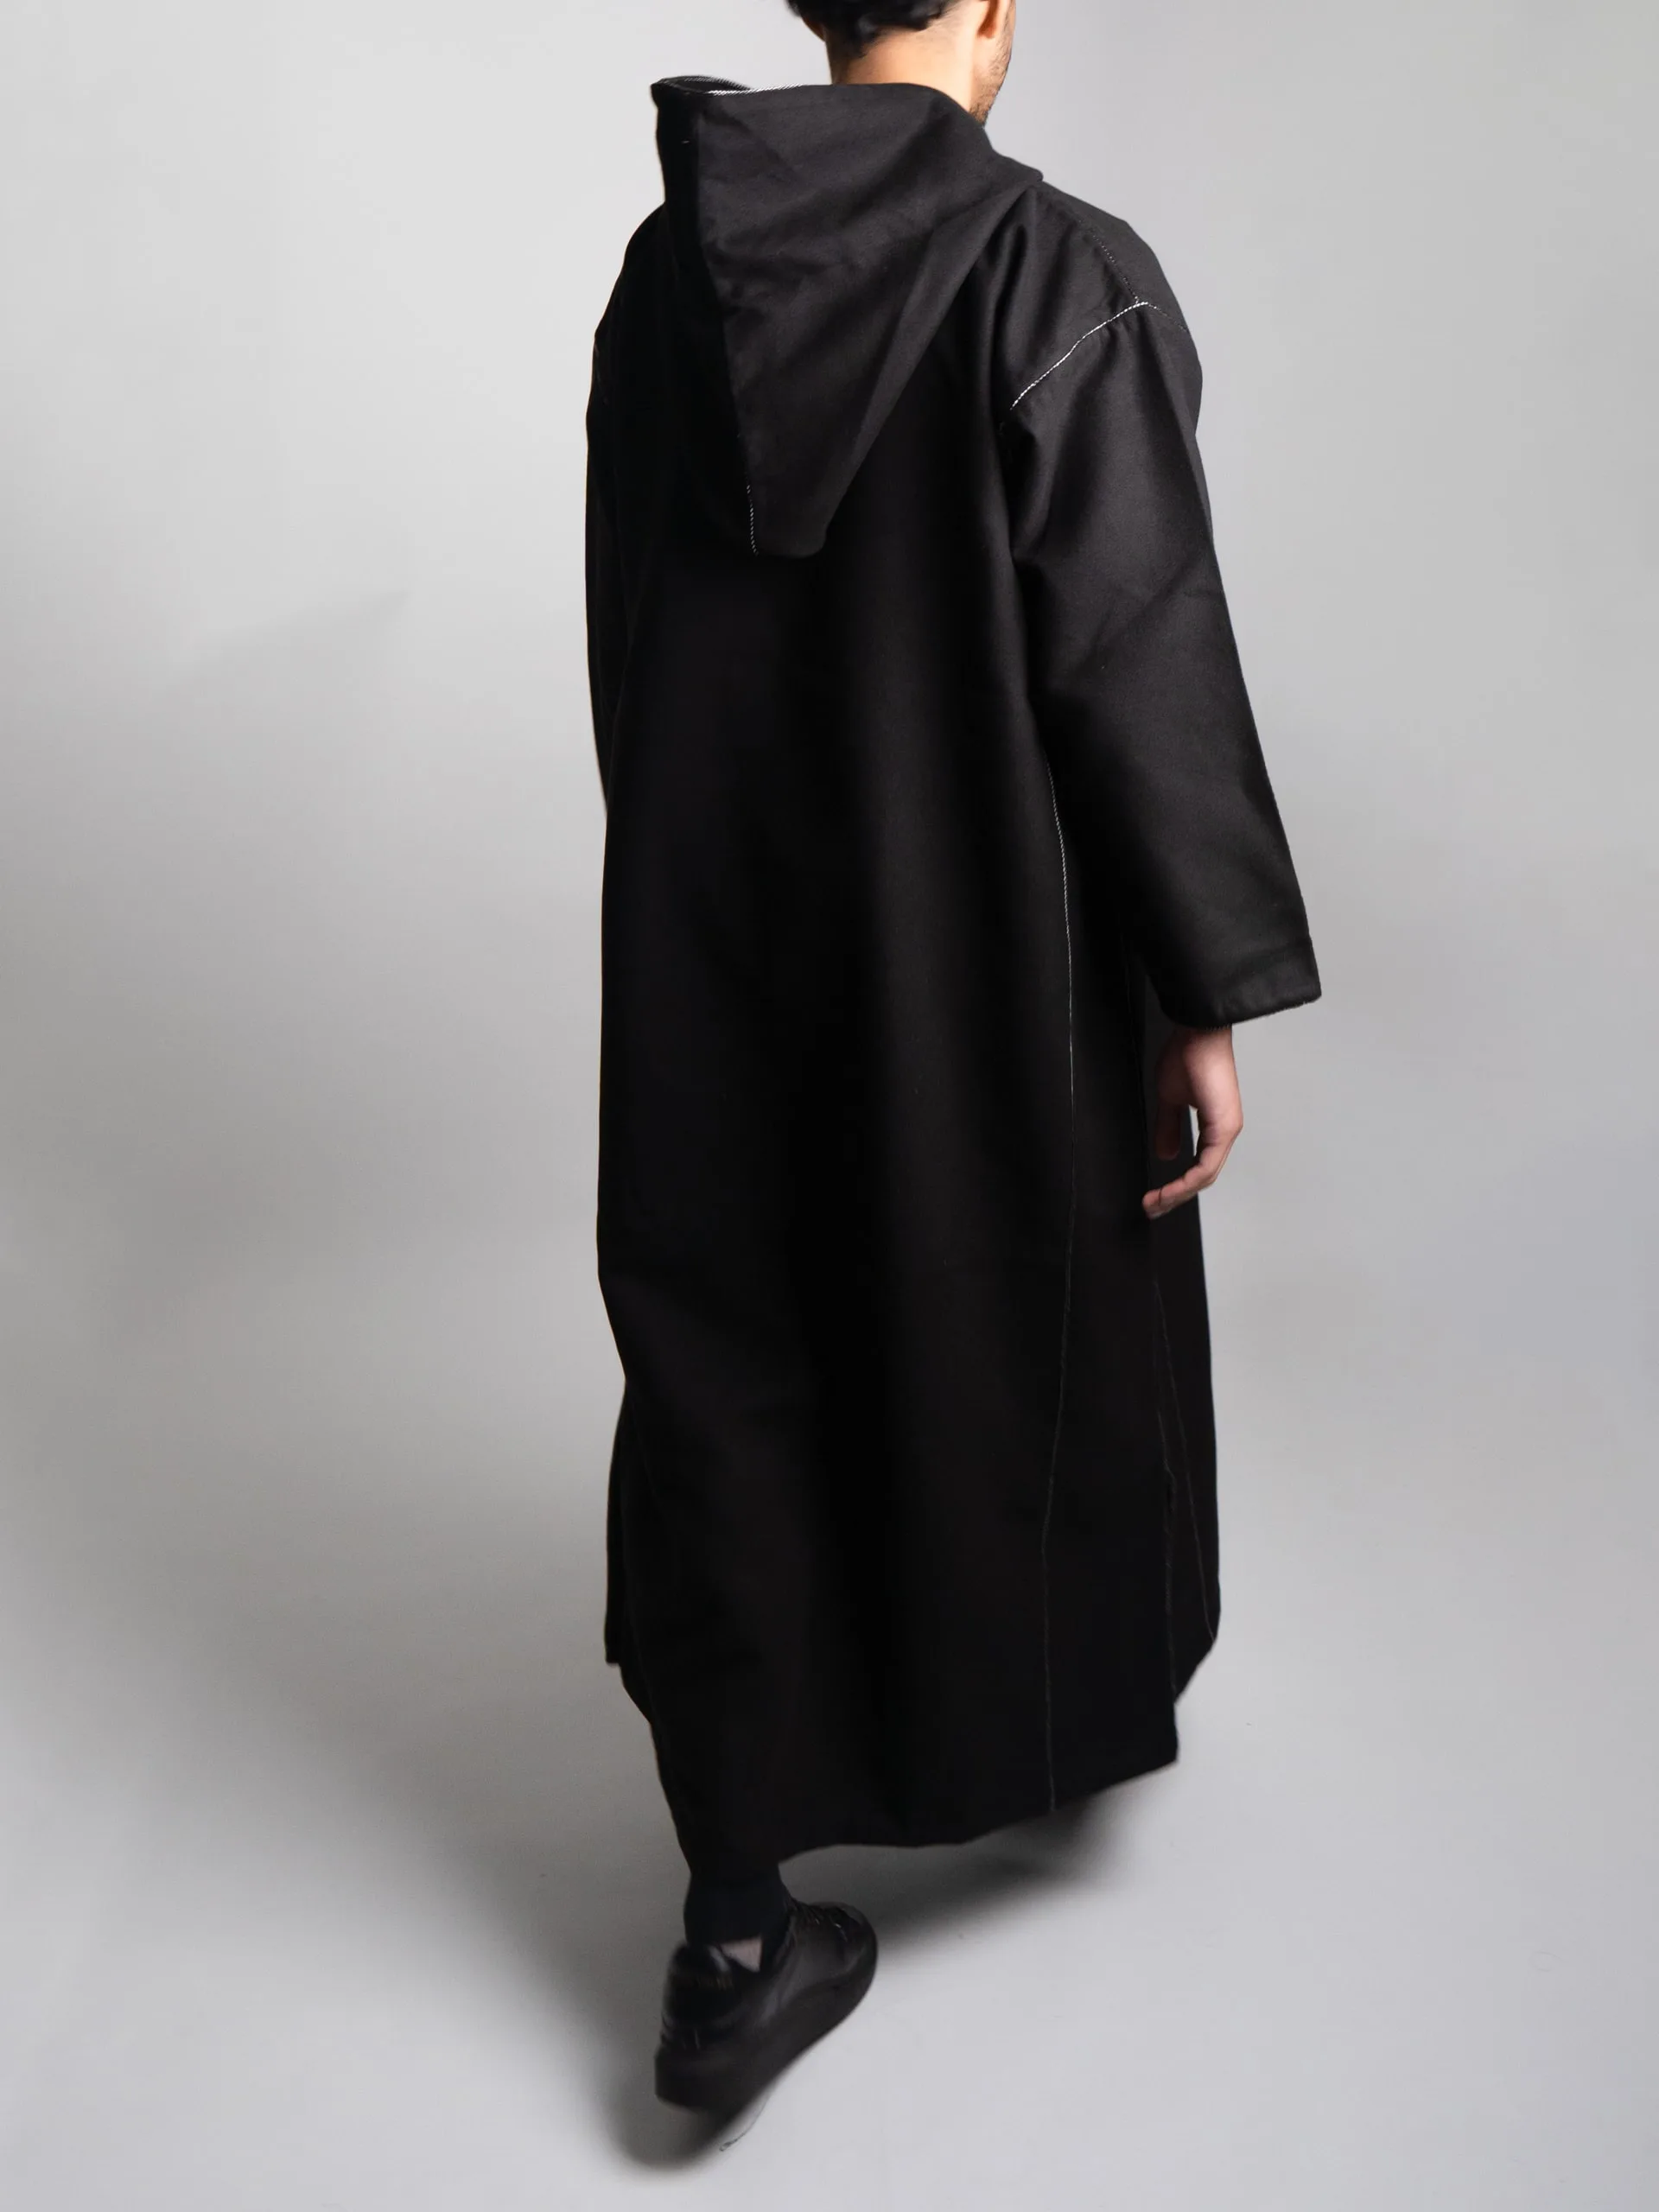 Onyx Black Hooded Moroccan Thobe – Jellabiya